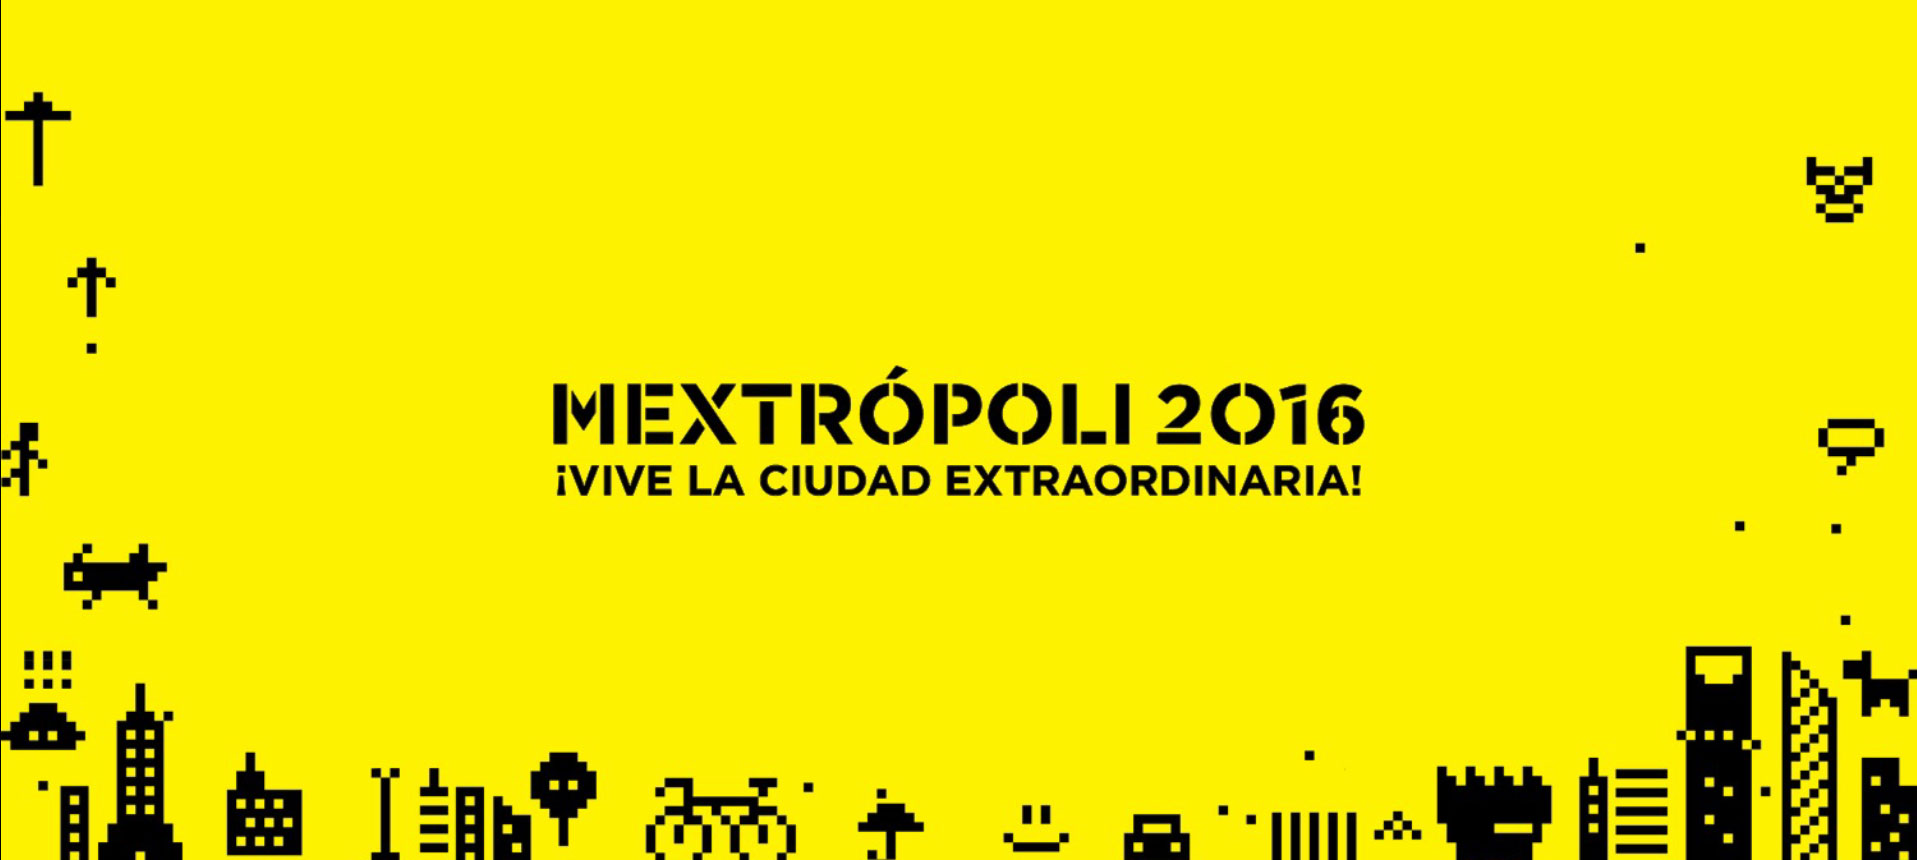 Architecture events in Mexico City